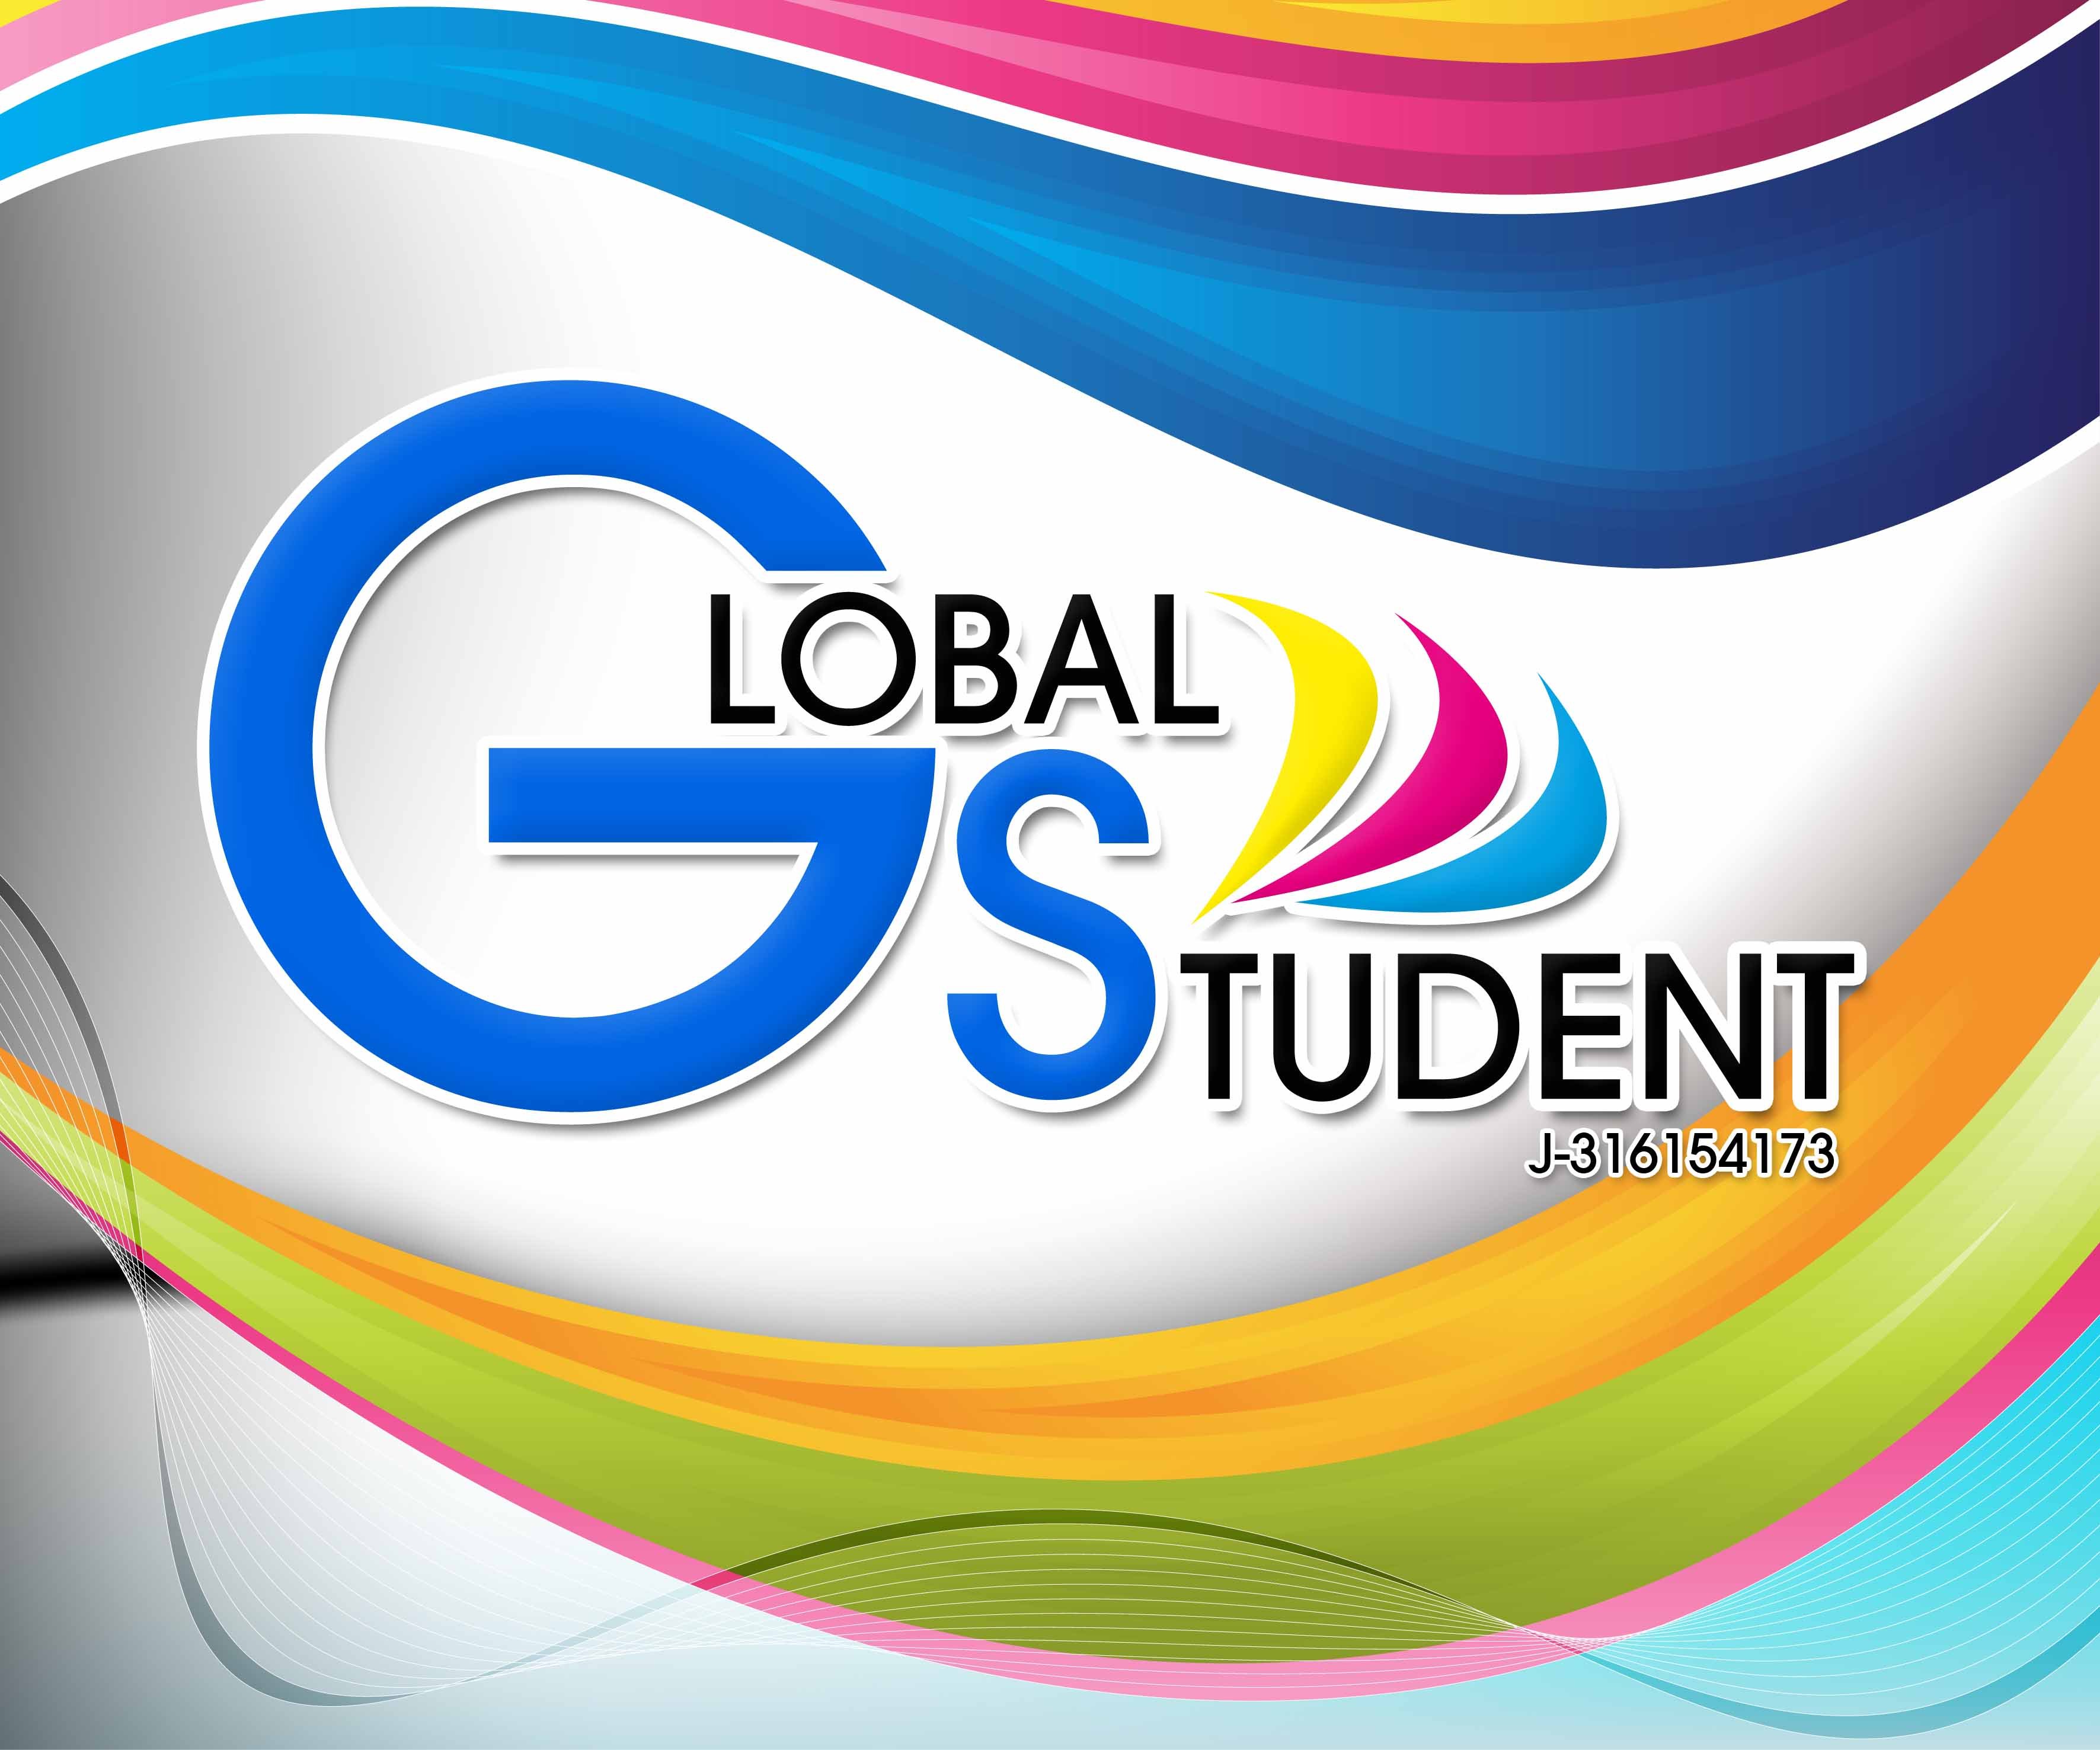 Global Student CA